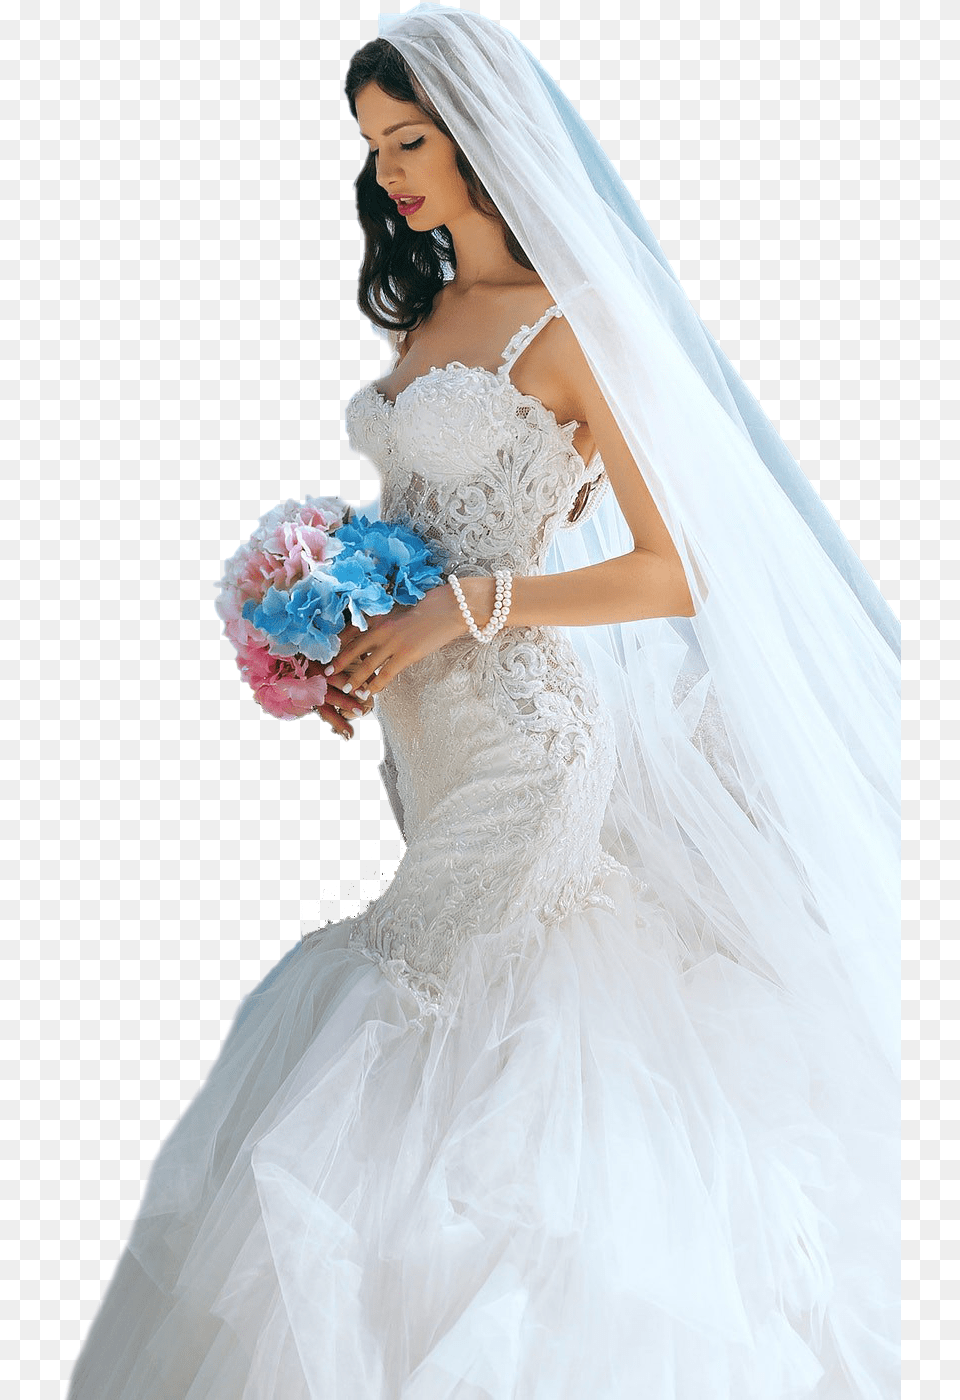 Bride Hd Image Bride Wedding, Flower Arrangement, Gown, Formal Wear, Flower Bouquet Free Transparent Png